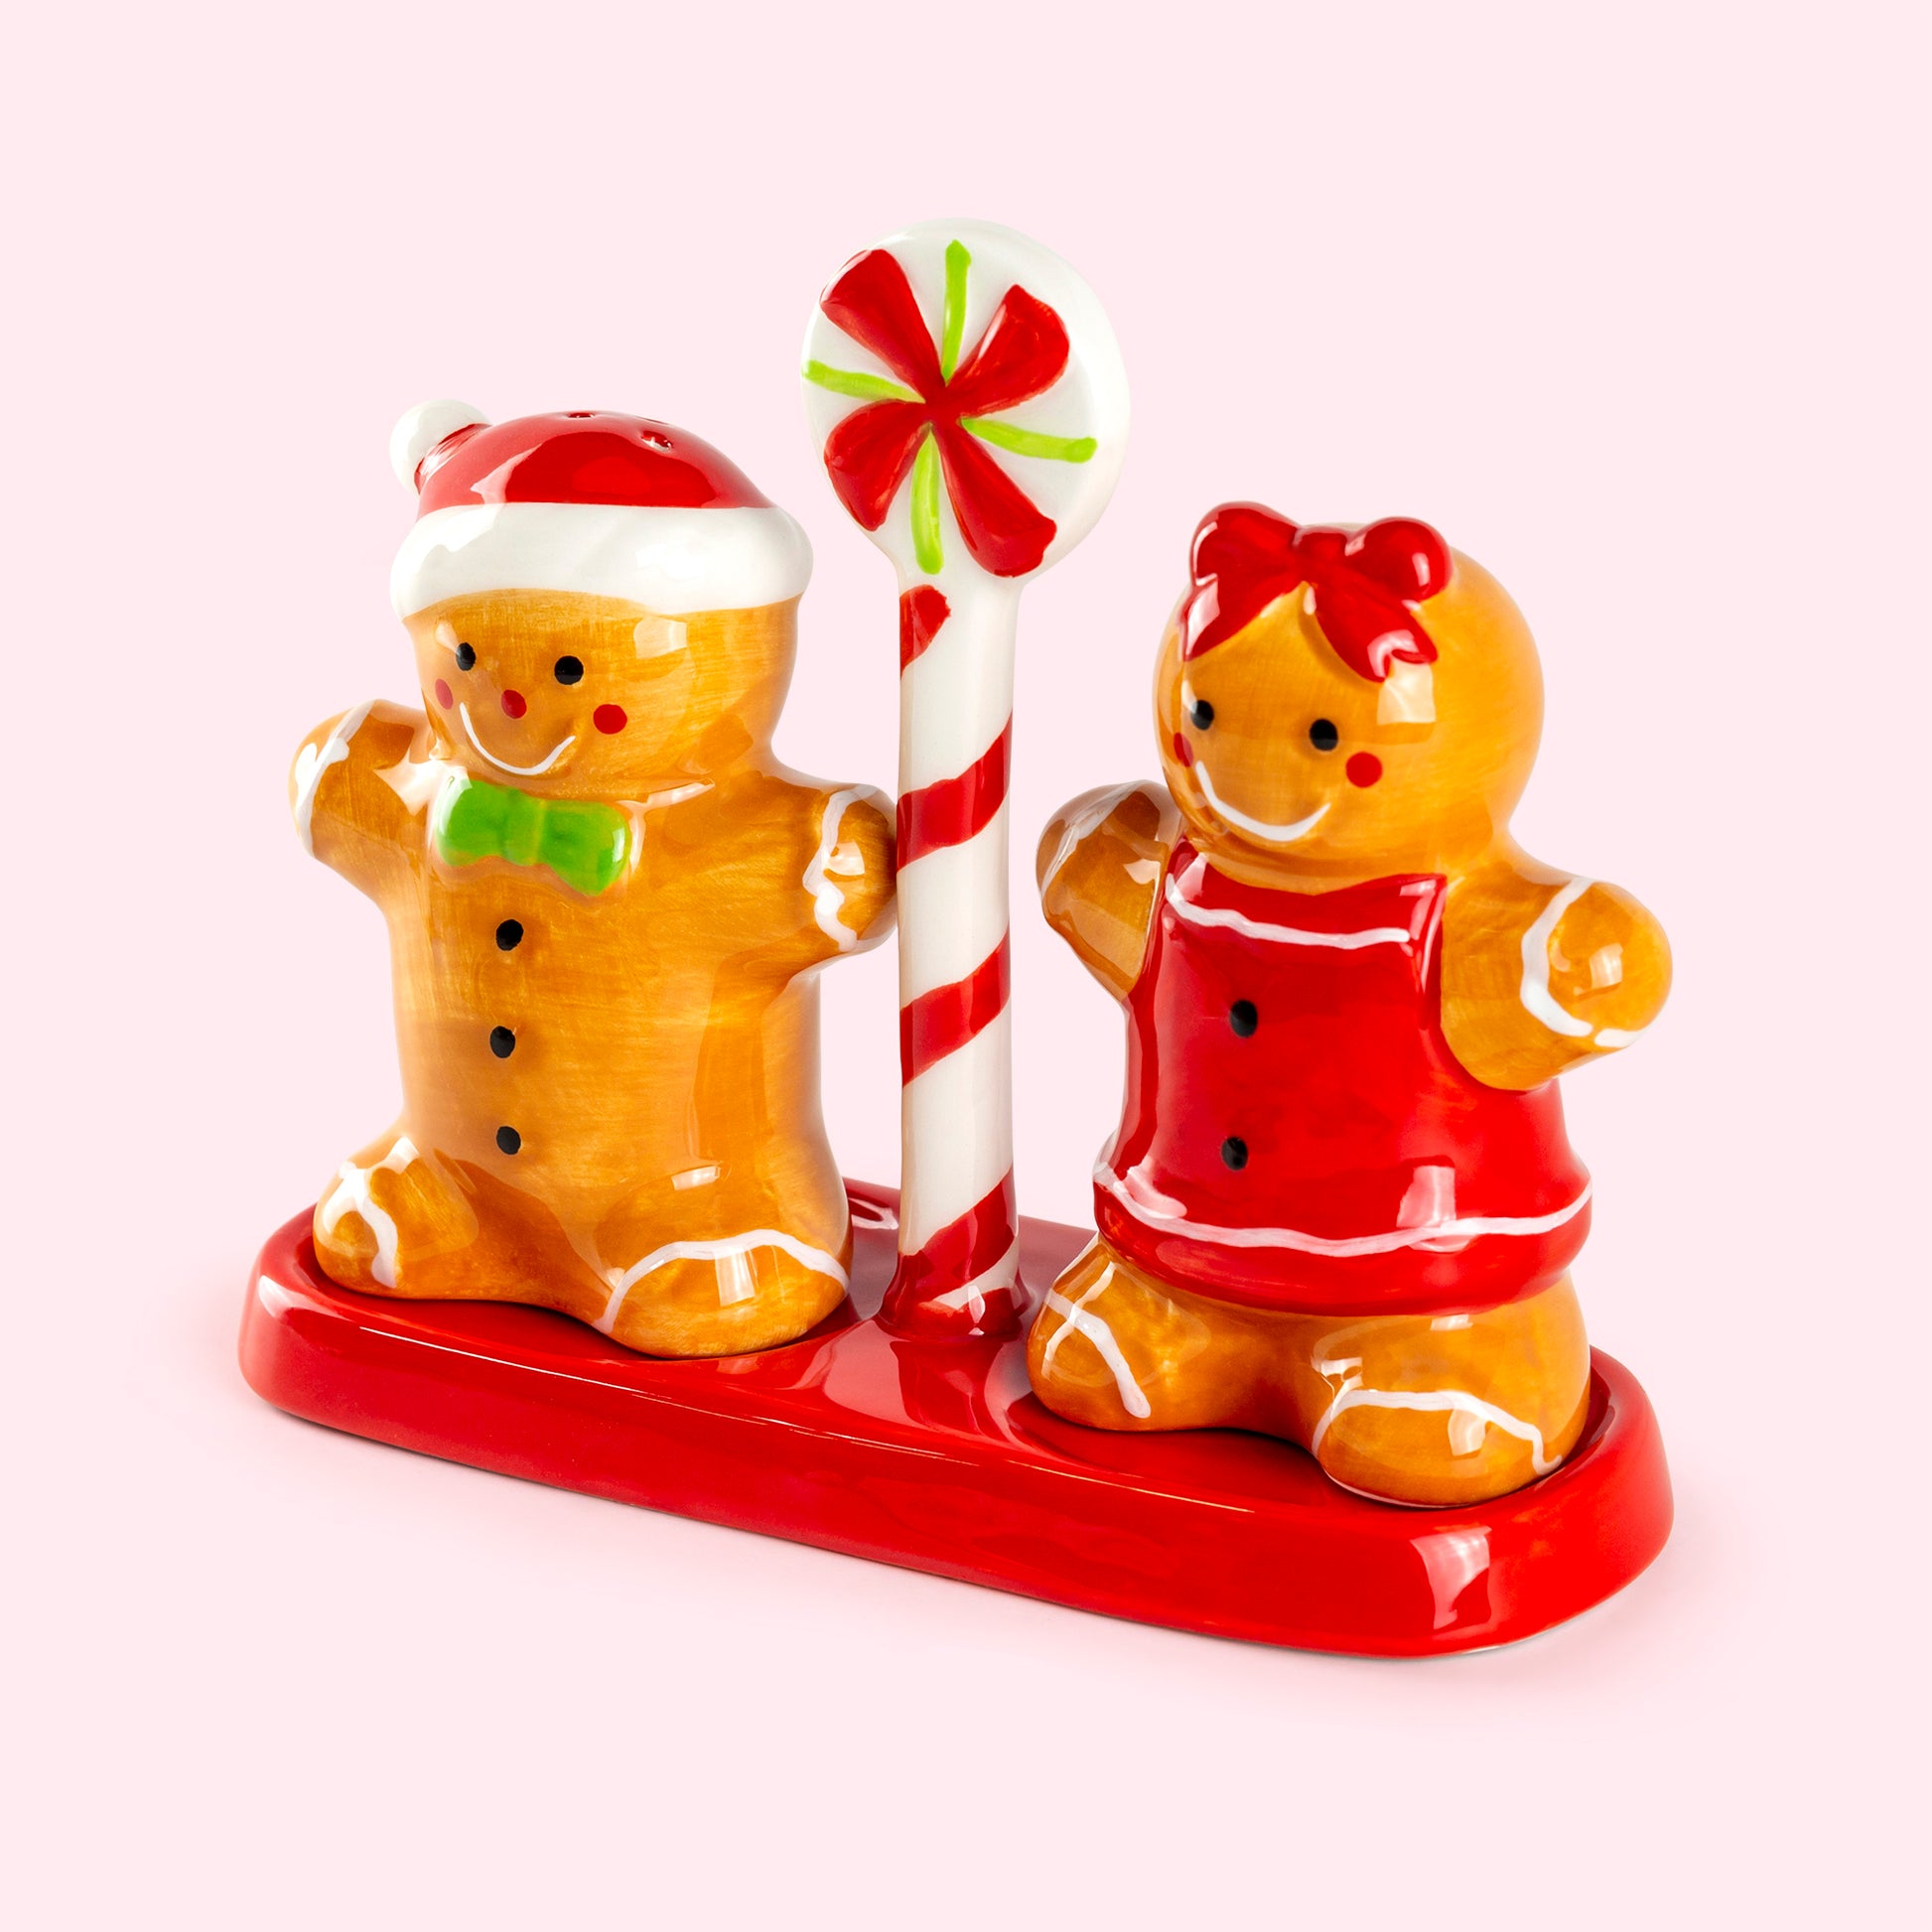 Potter's Studio Gift Boxed Gingerbread Figurine Salt and Pepper Shaker Set